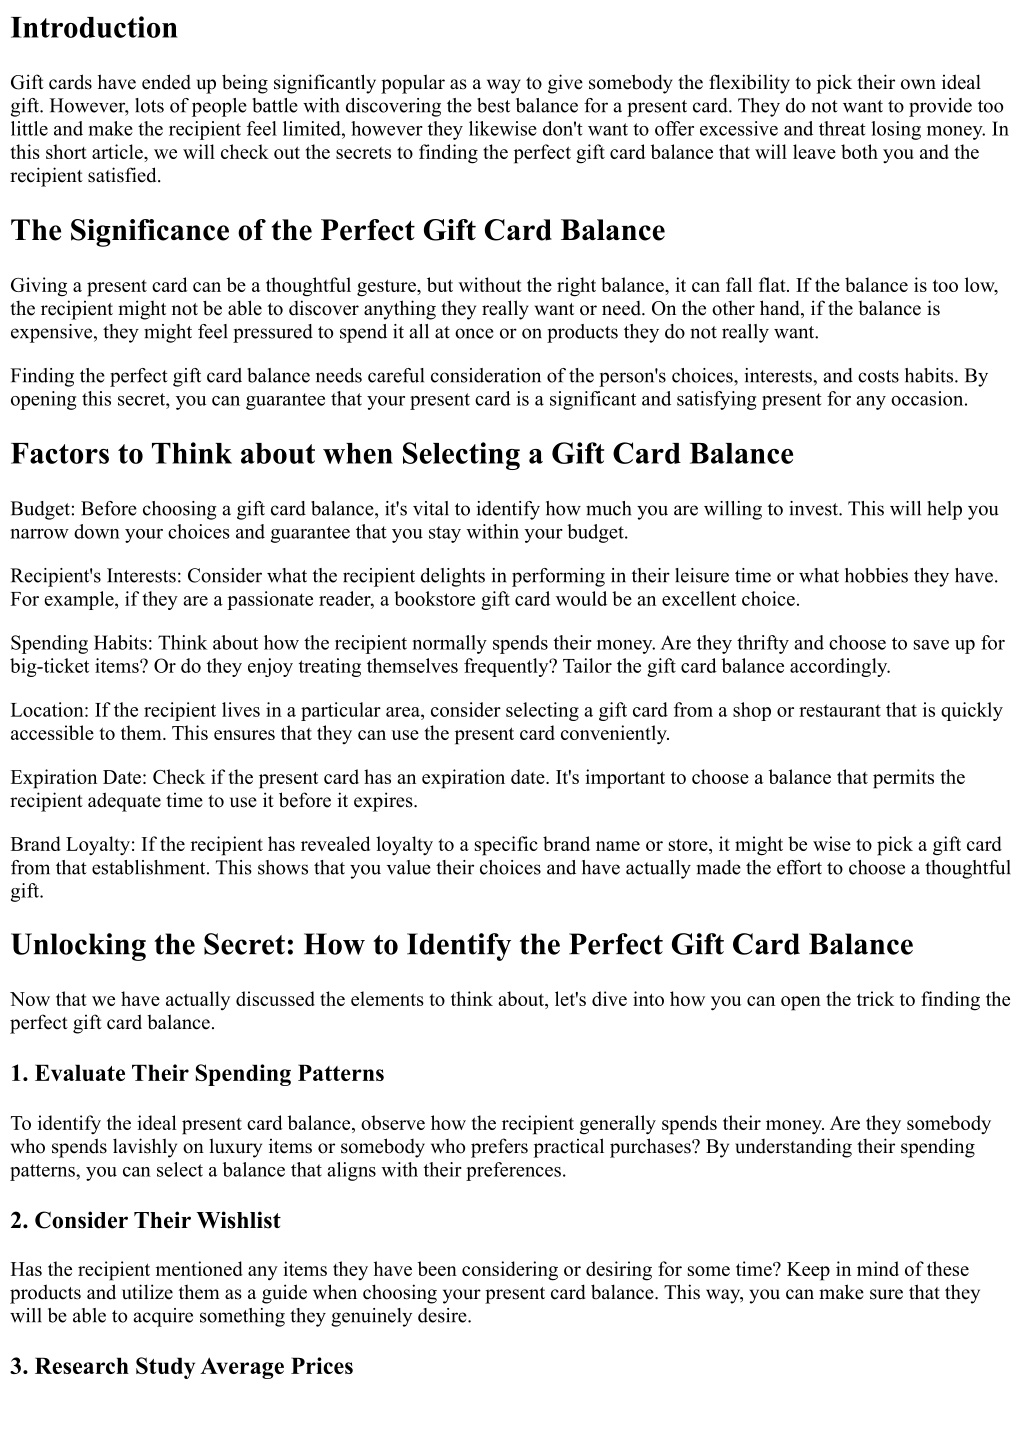 Zappos.com Gift Card Balance | GiftCards.com